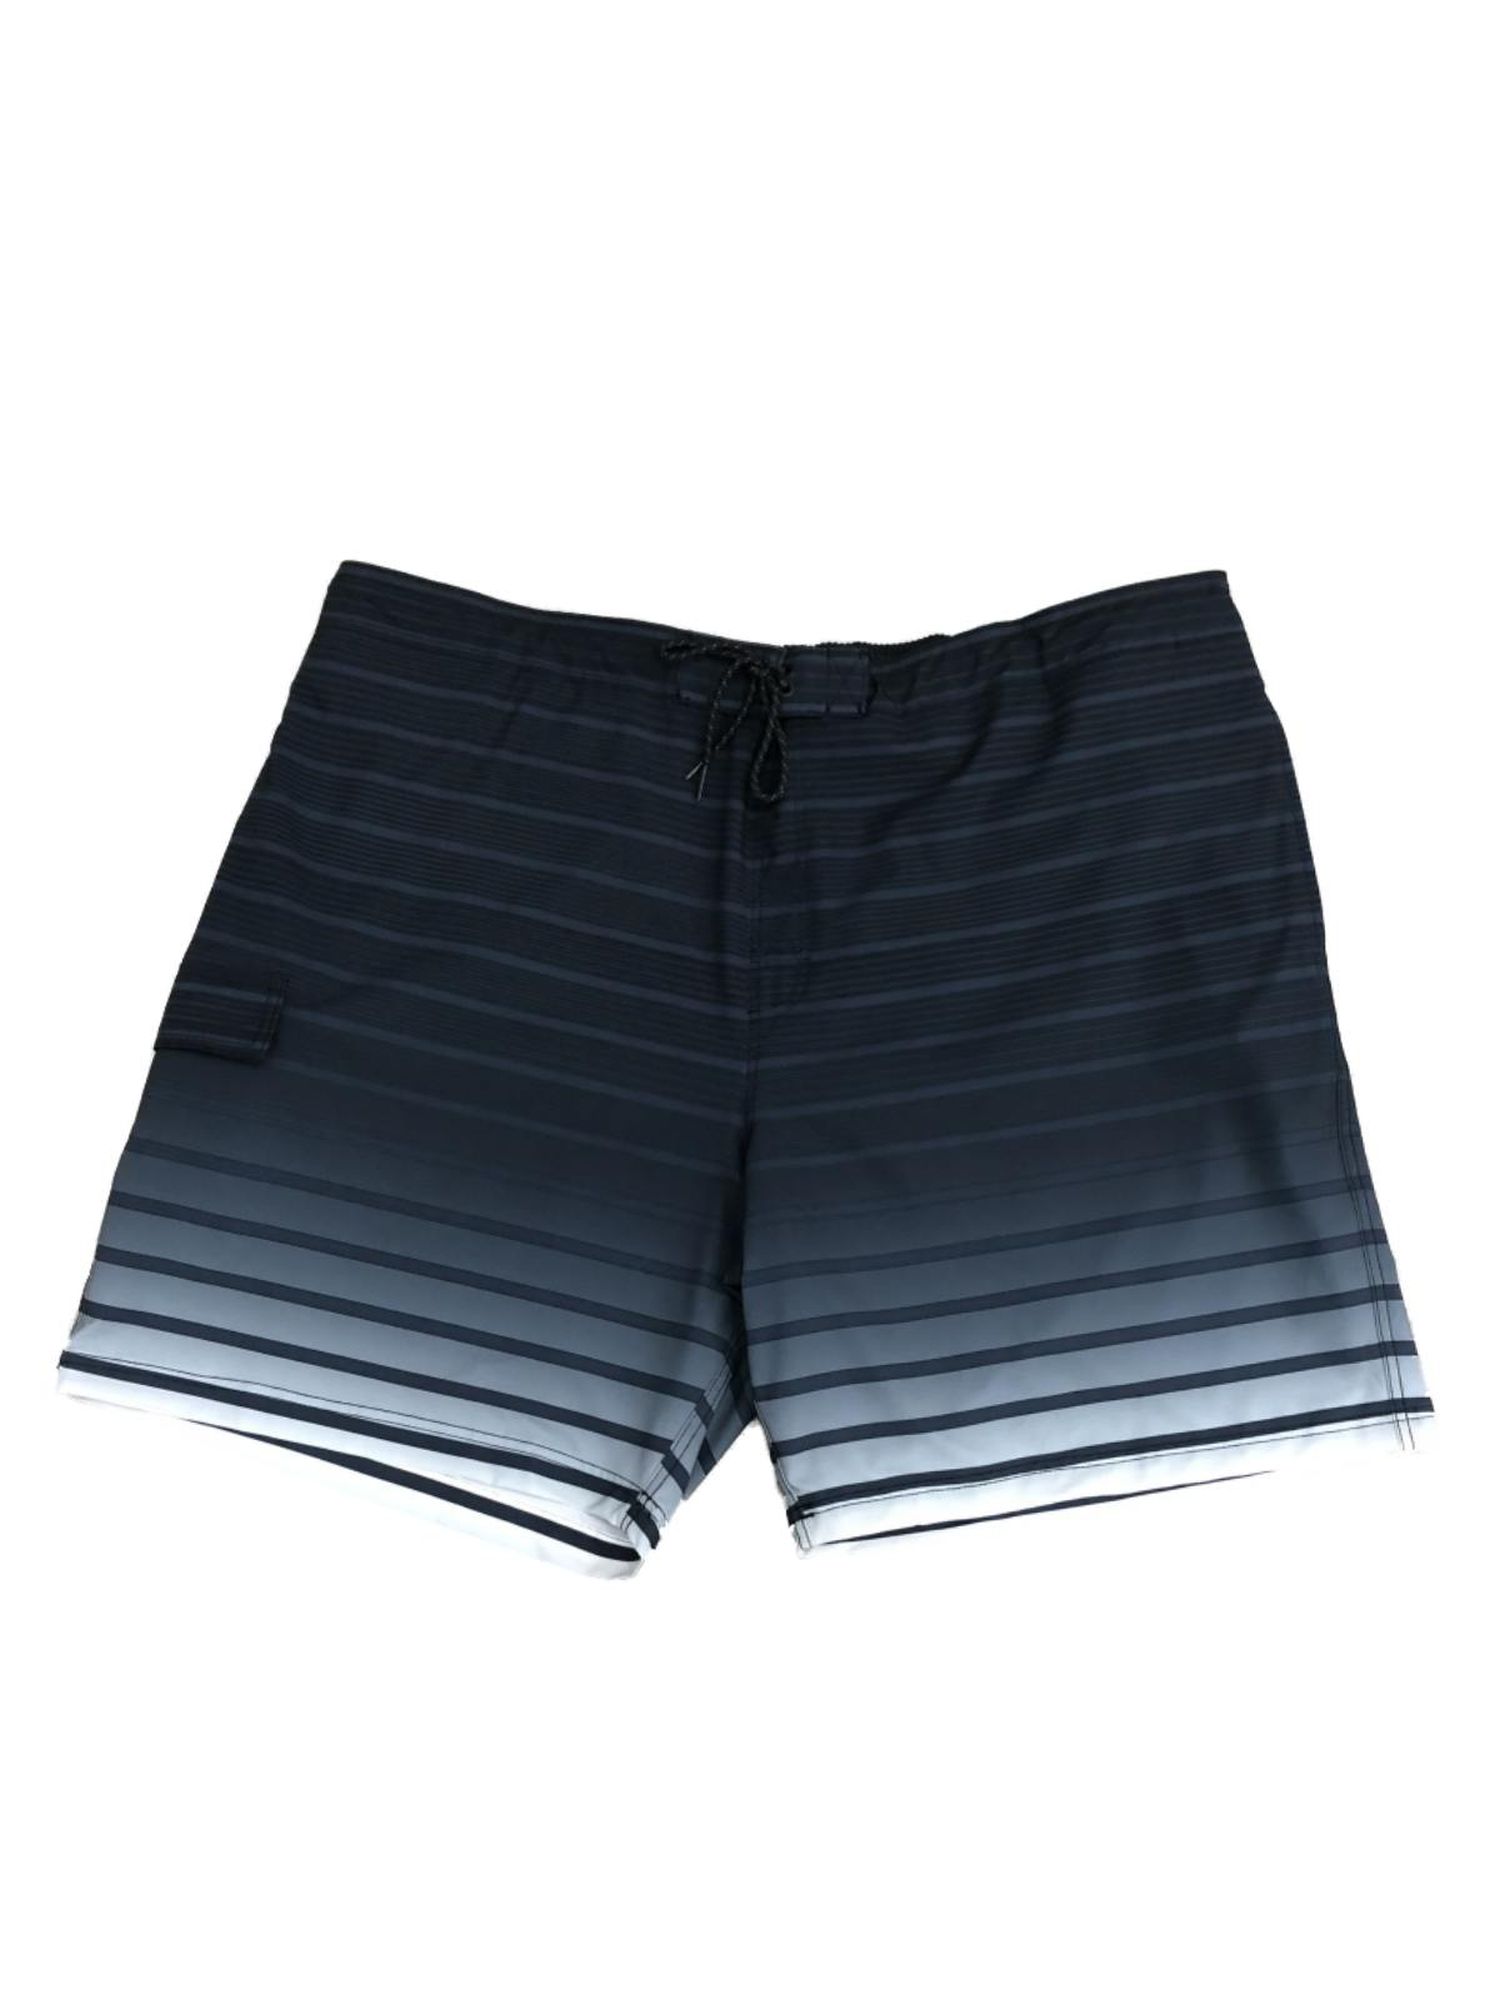 GEORGE Mens Black Fade Gray White Striped Board Shorts Swim Trunks 3X-Large